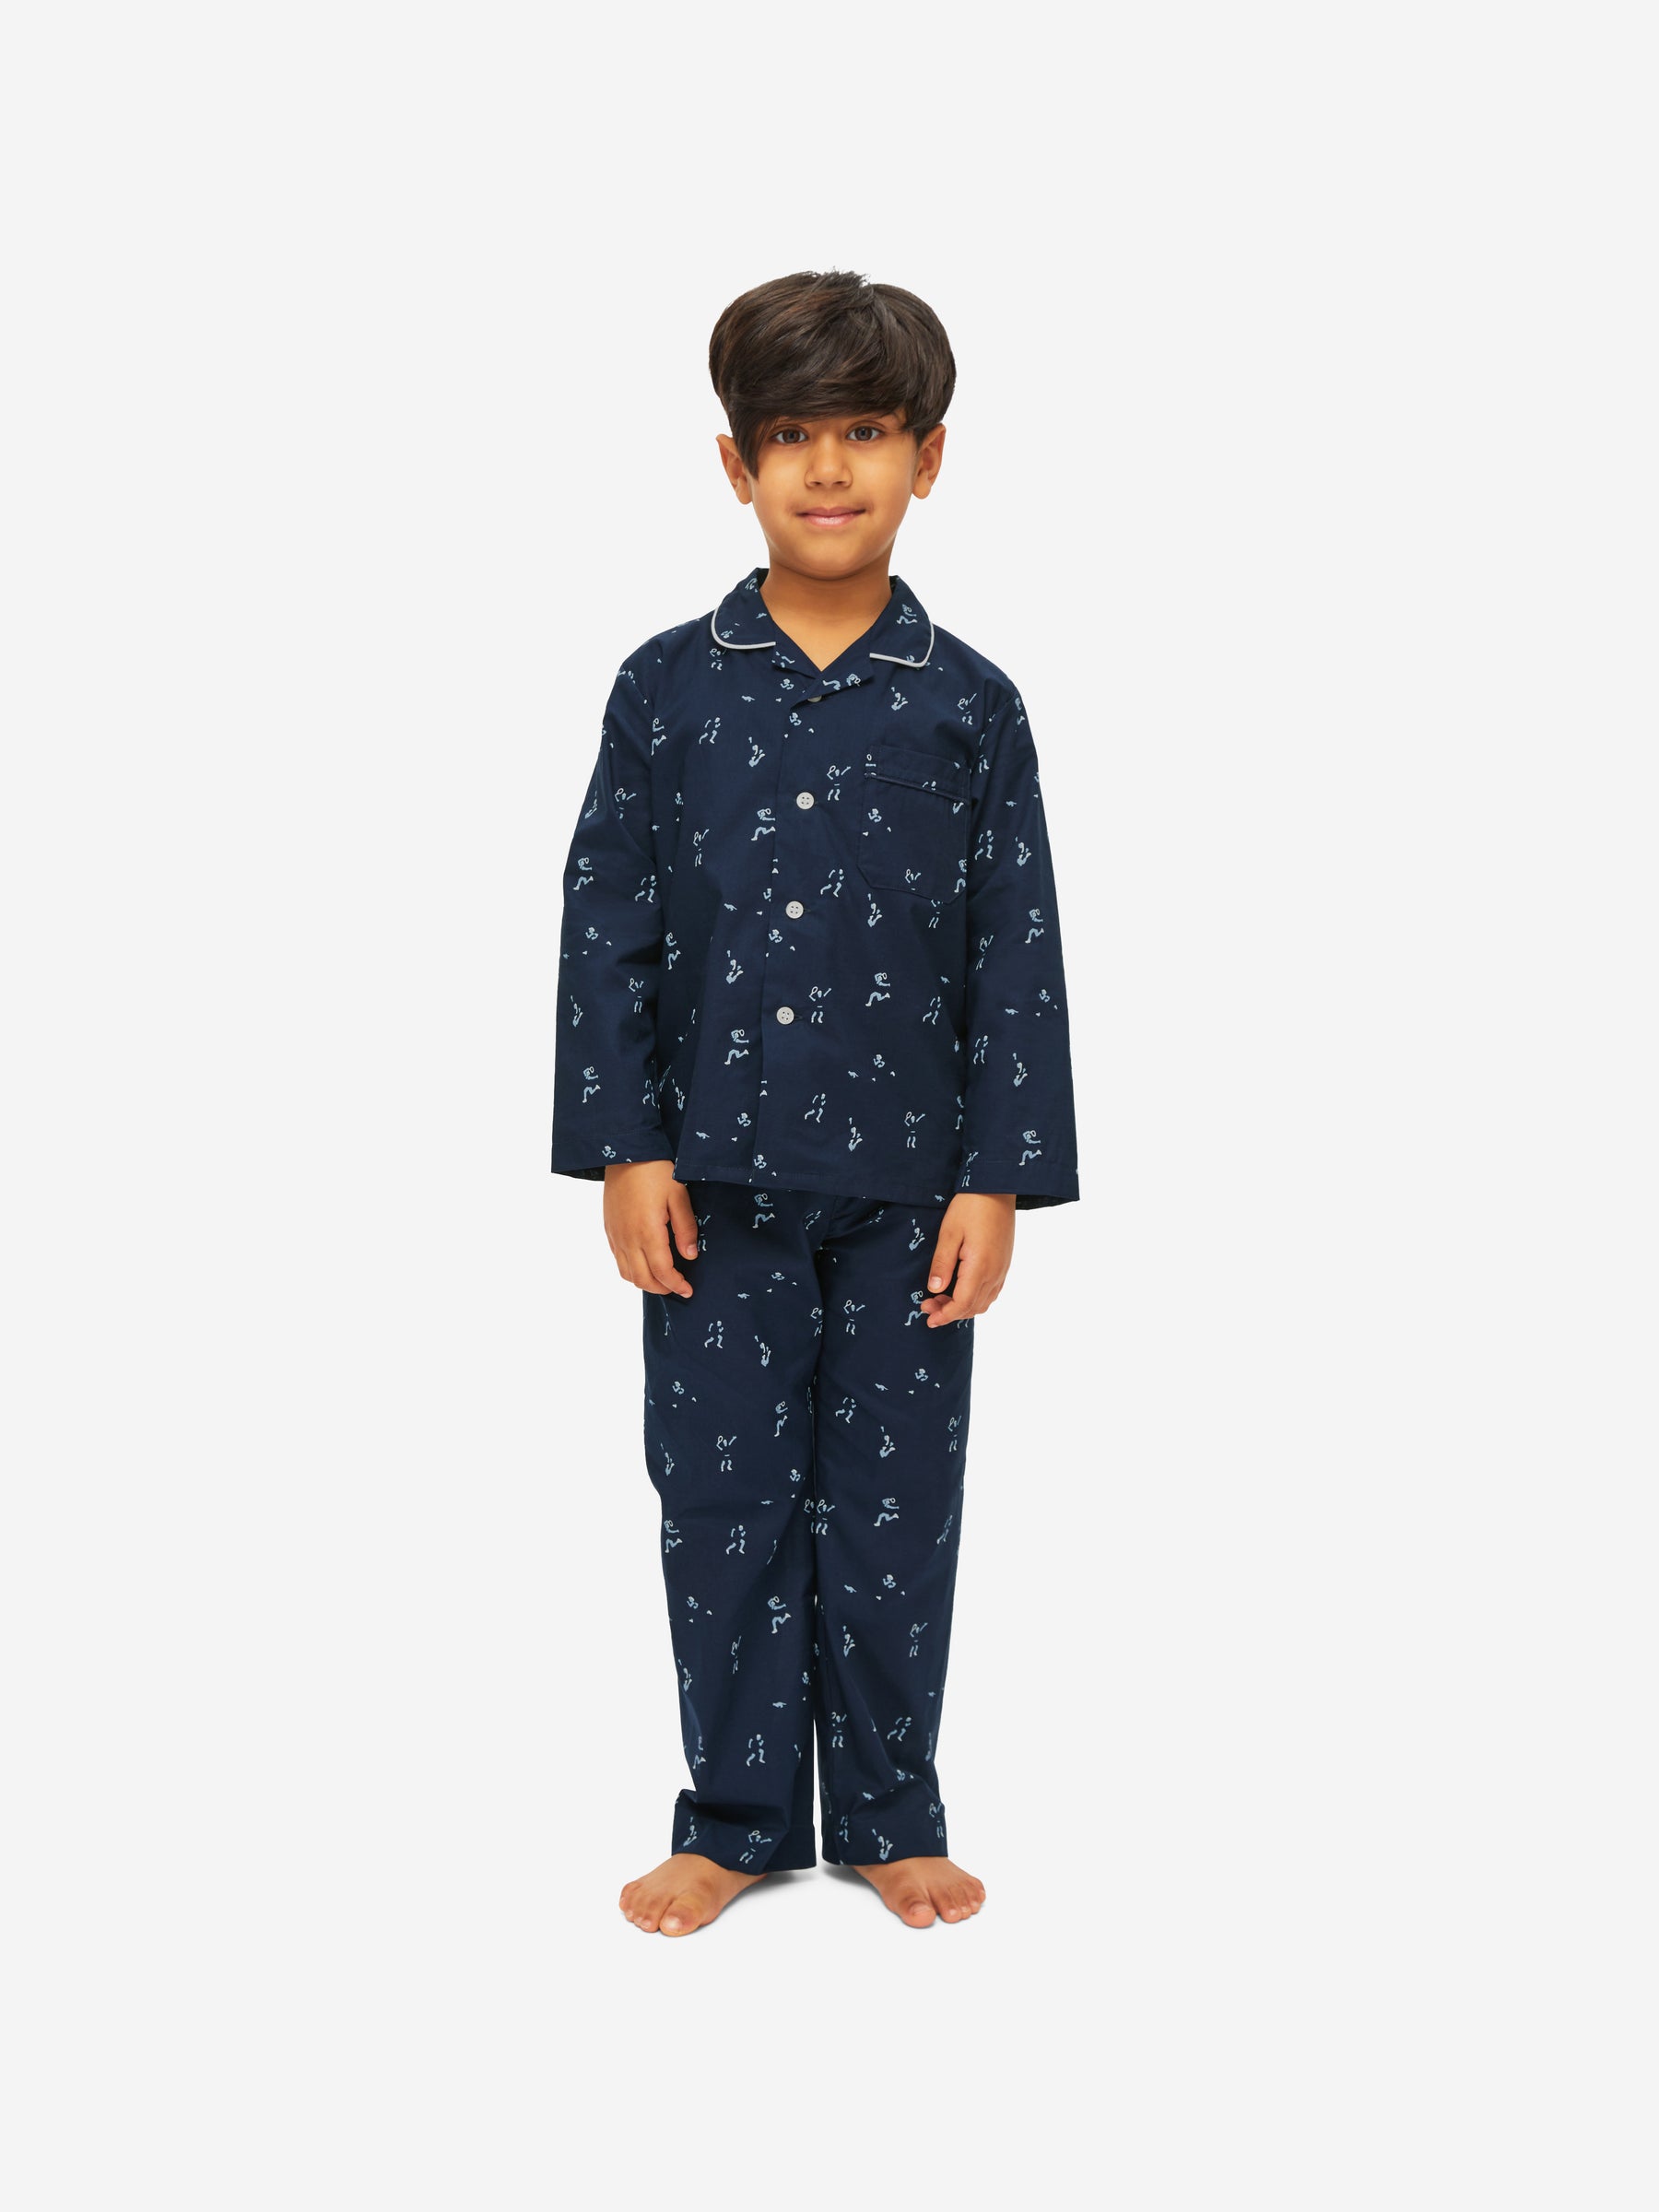 Kids' Pyjamas Nelson 91 Cotton Batiste Navy